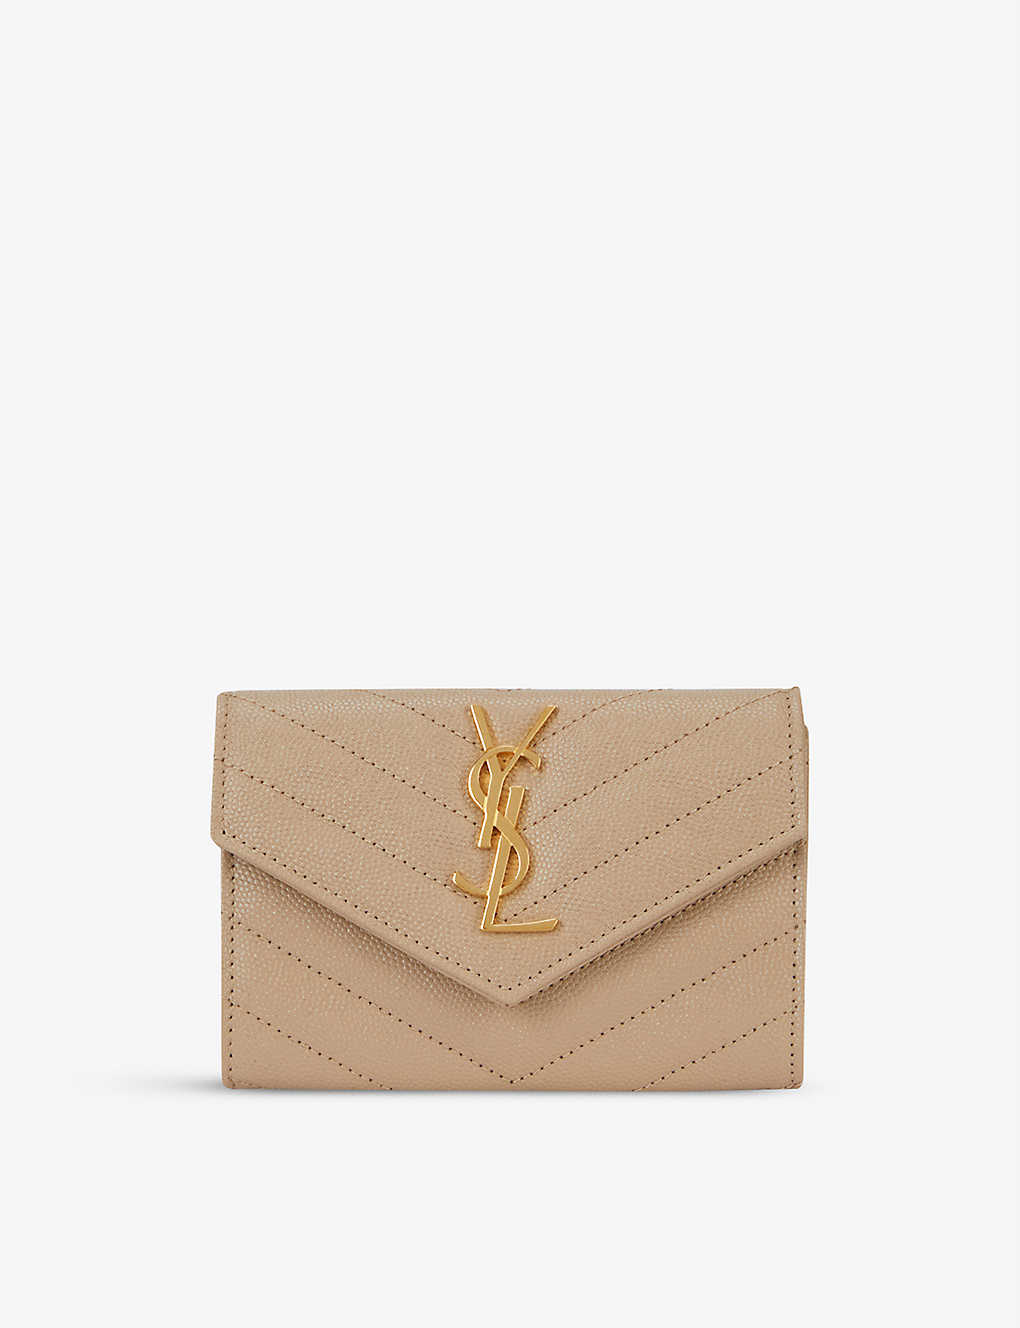 Saint Laurent Monogram Small Leather Envelope Wallet In Dark Beige